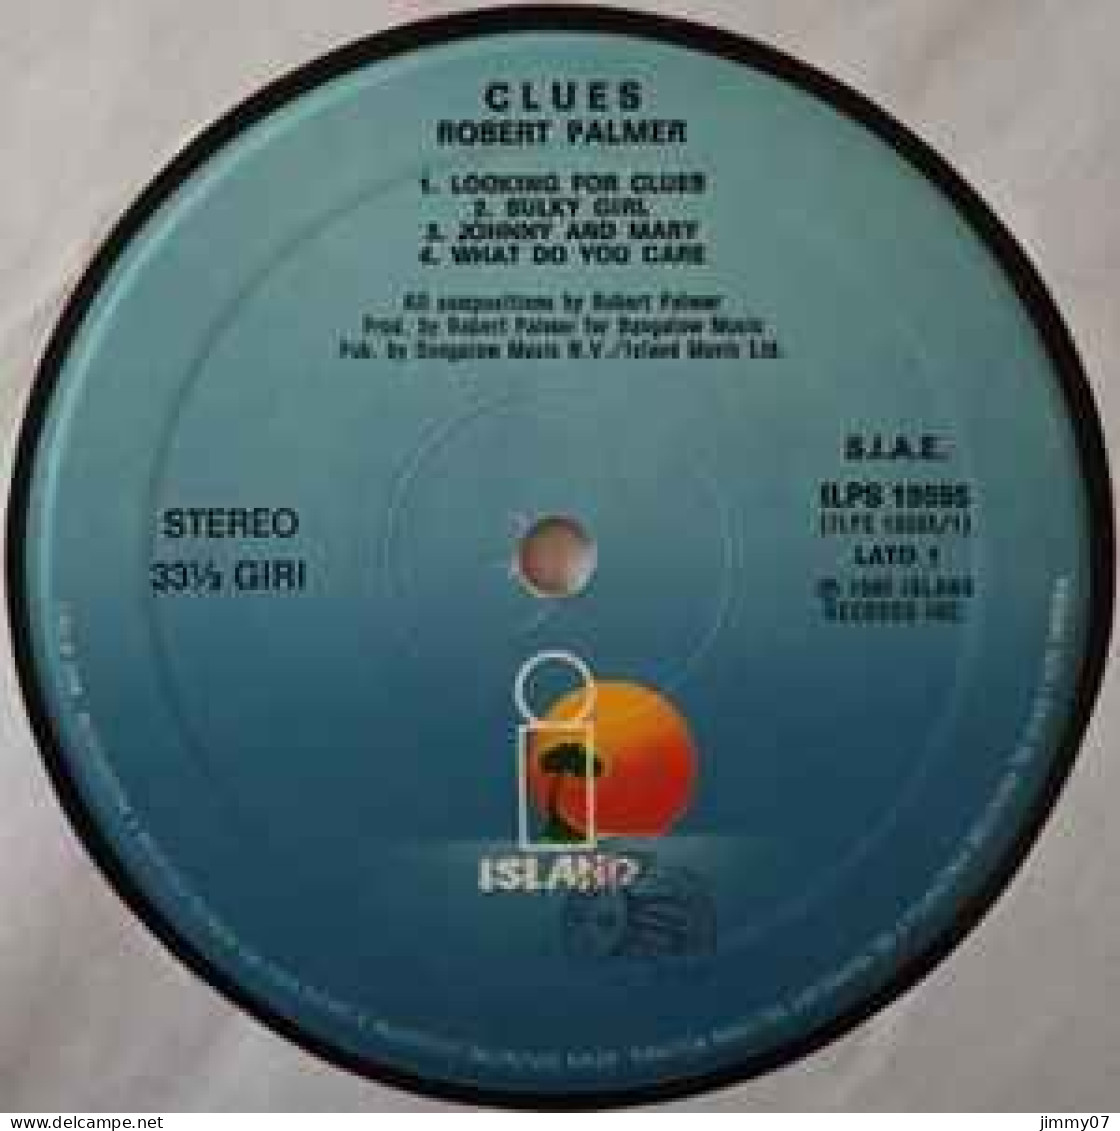 Robert Palmer - Clues (LP, Album) - Rock